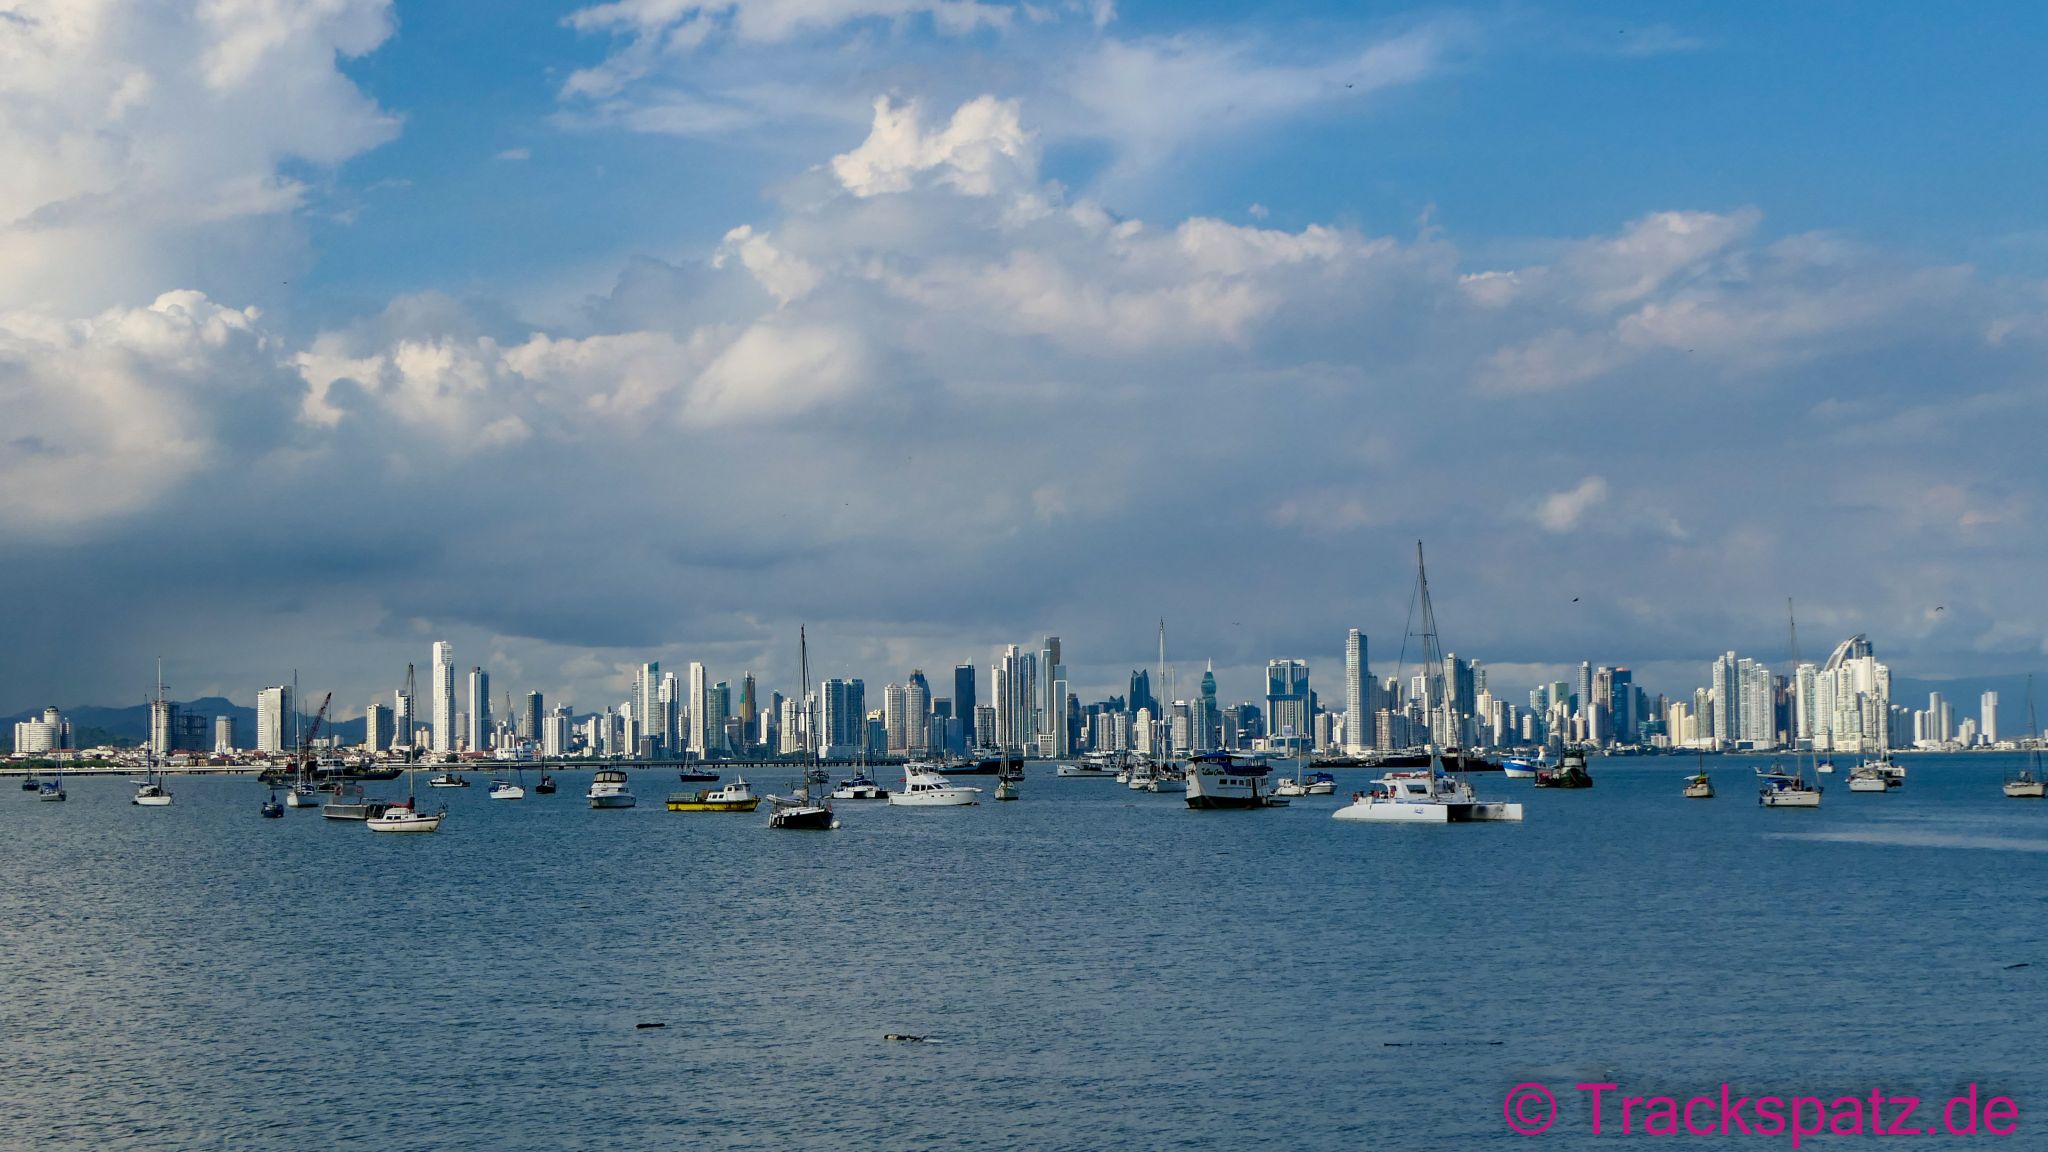 02 - Panama City Skyline